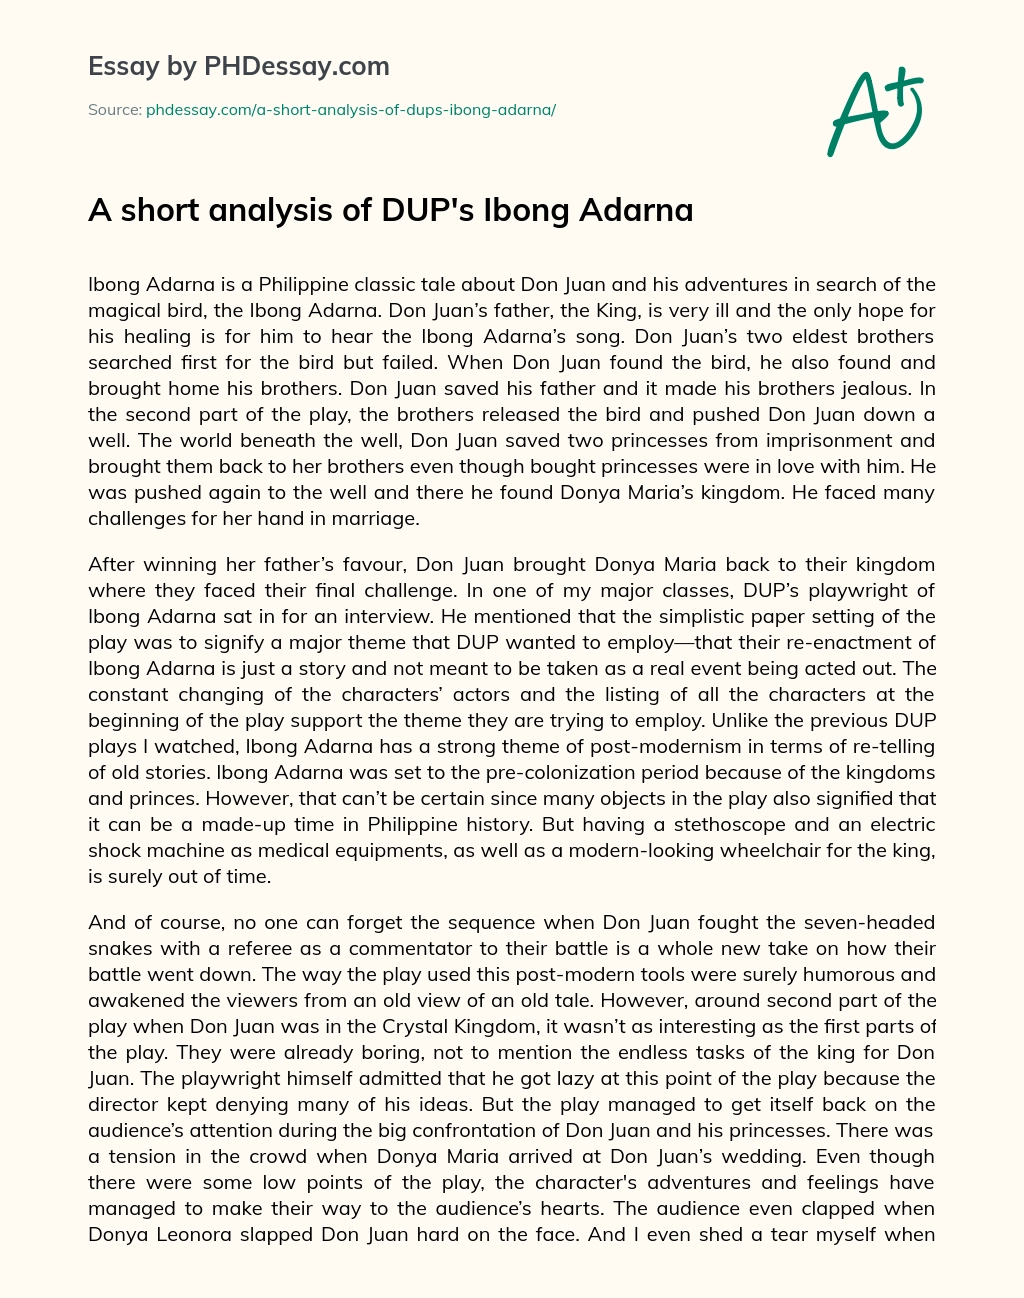 A short analysis of DUP’s Ibong Adarna essay